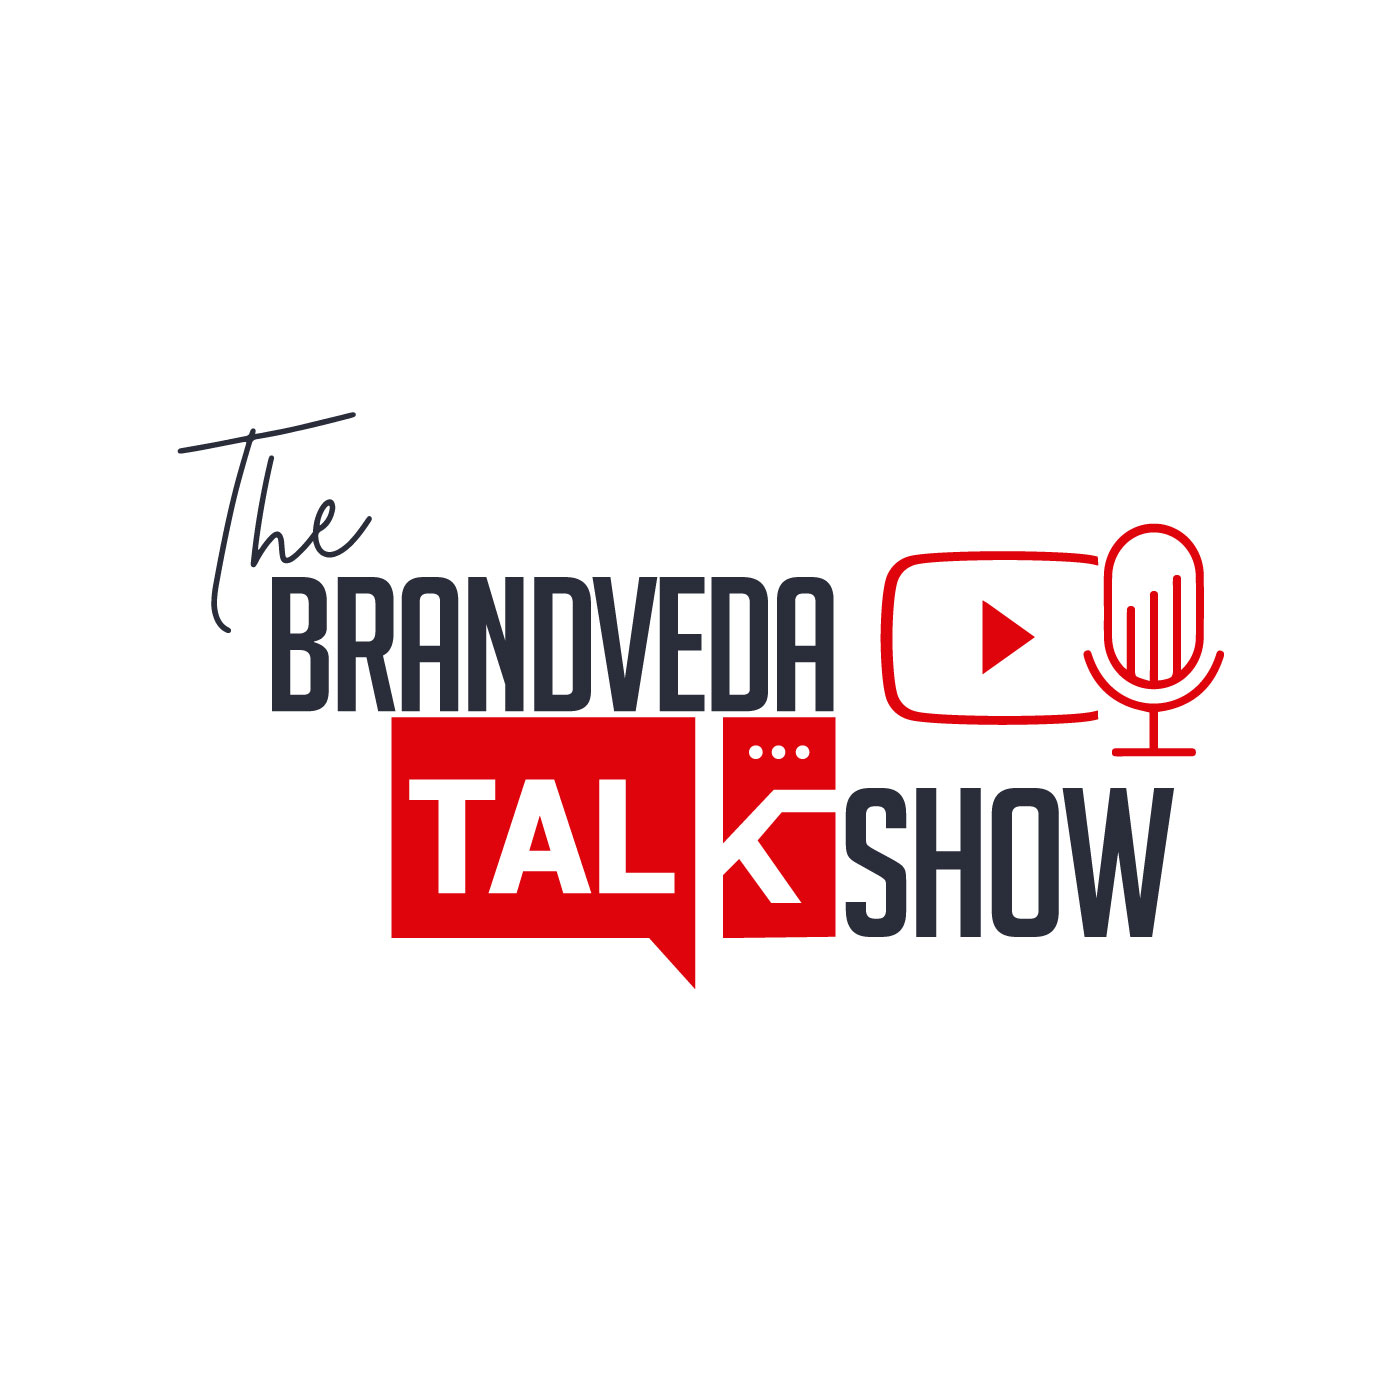 The Brandveda Talkshow | Podcast for Digital Marketing Insights and Metrics